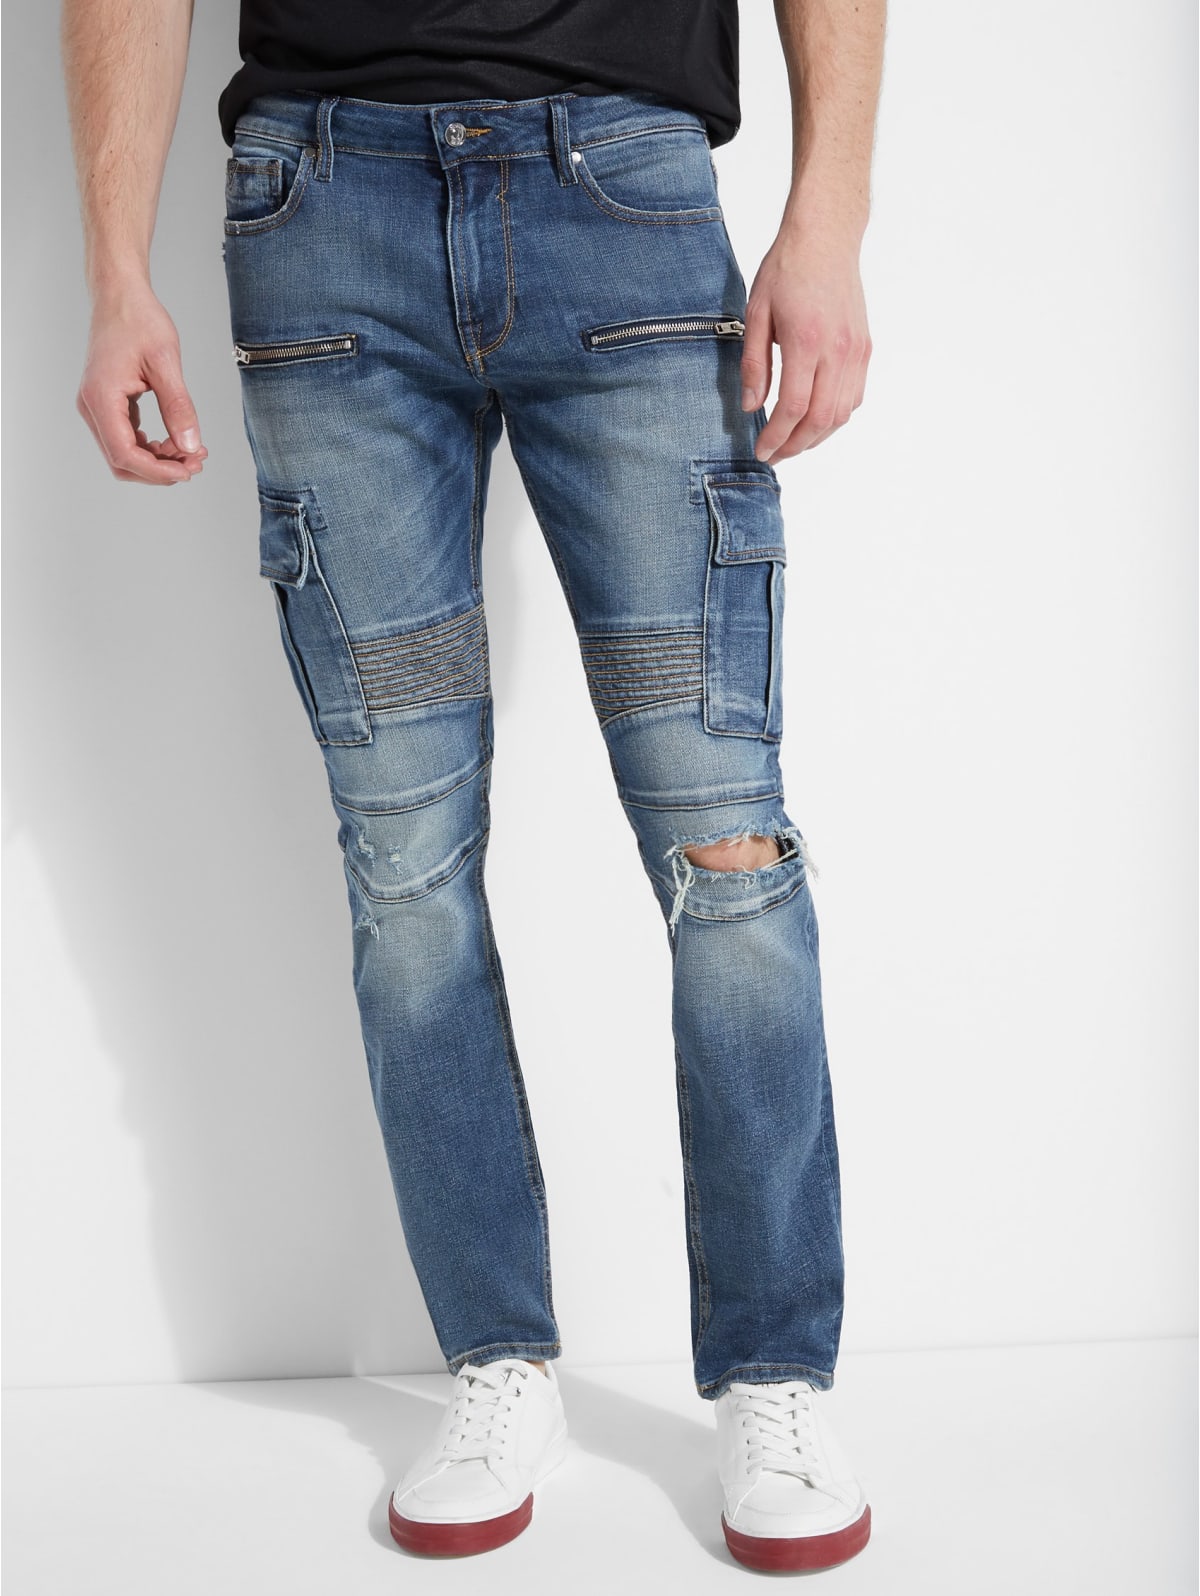 moto jeans canada